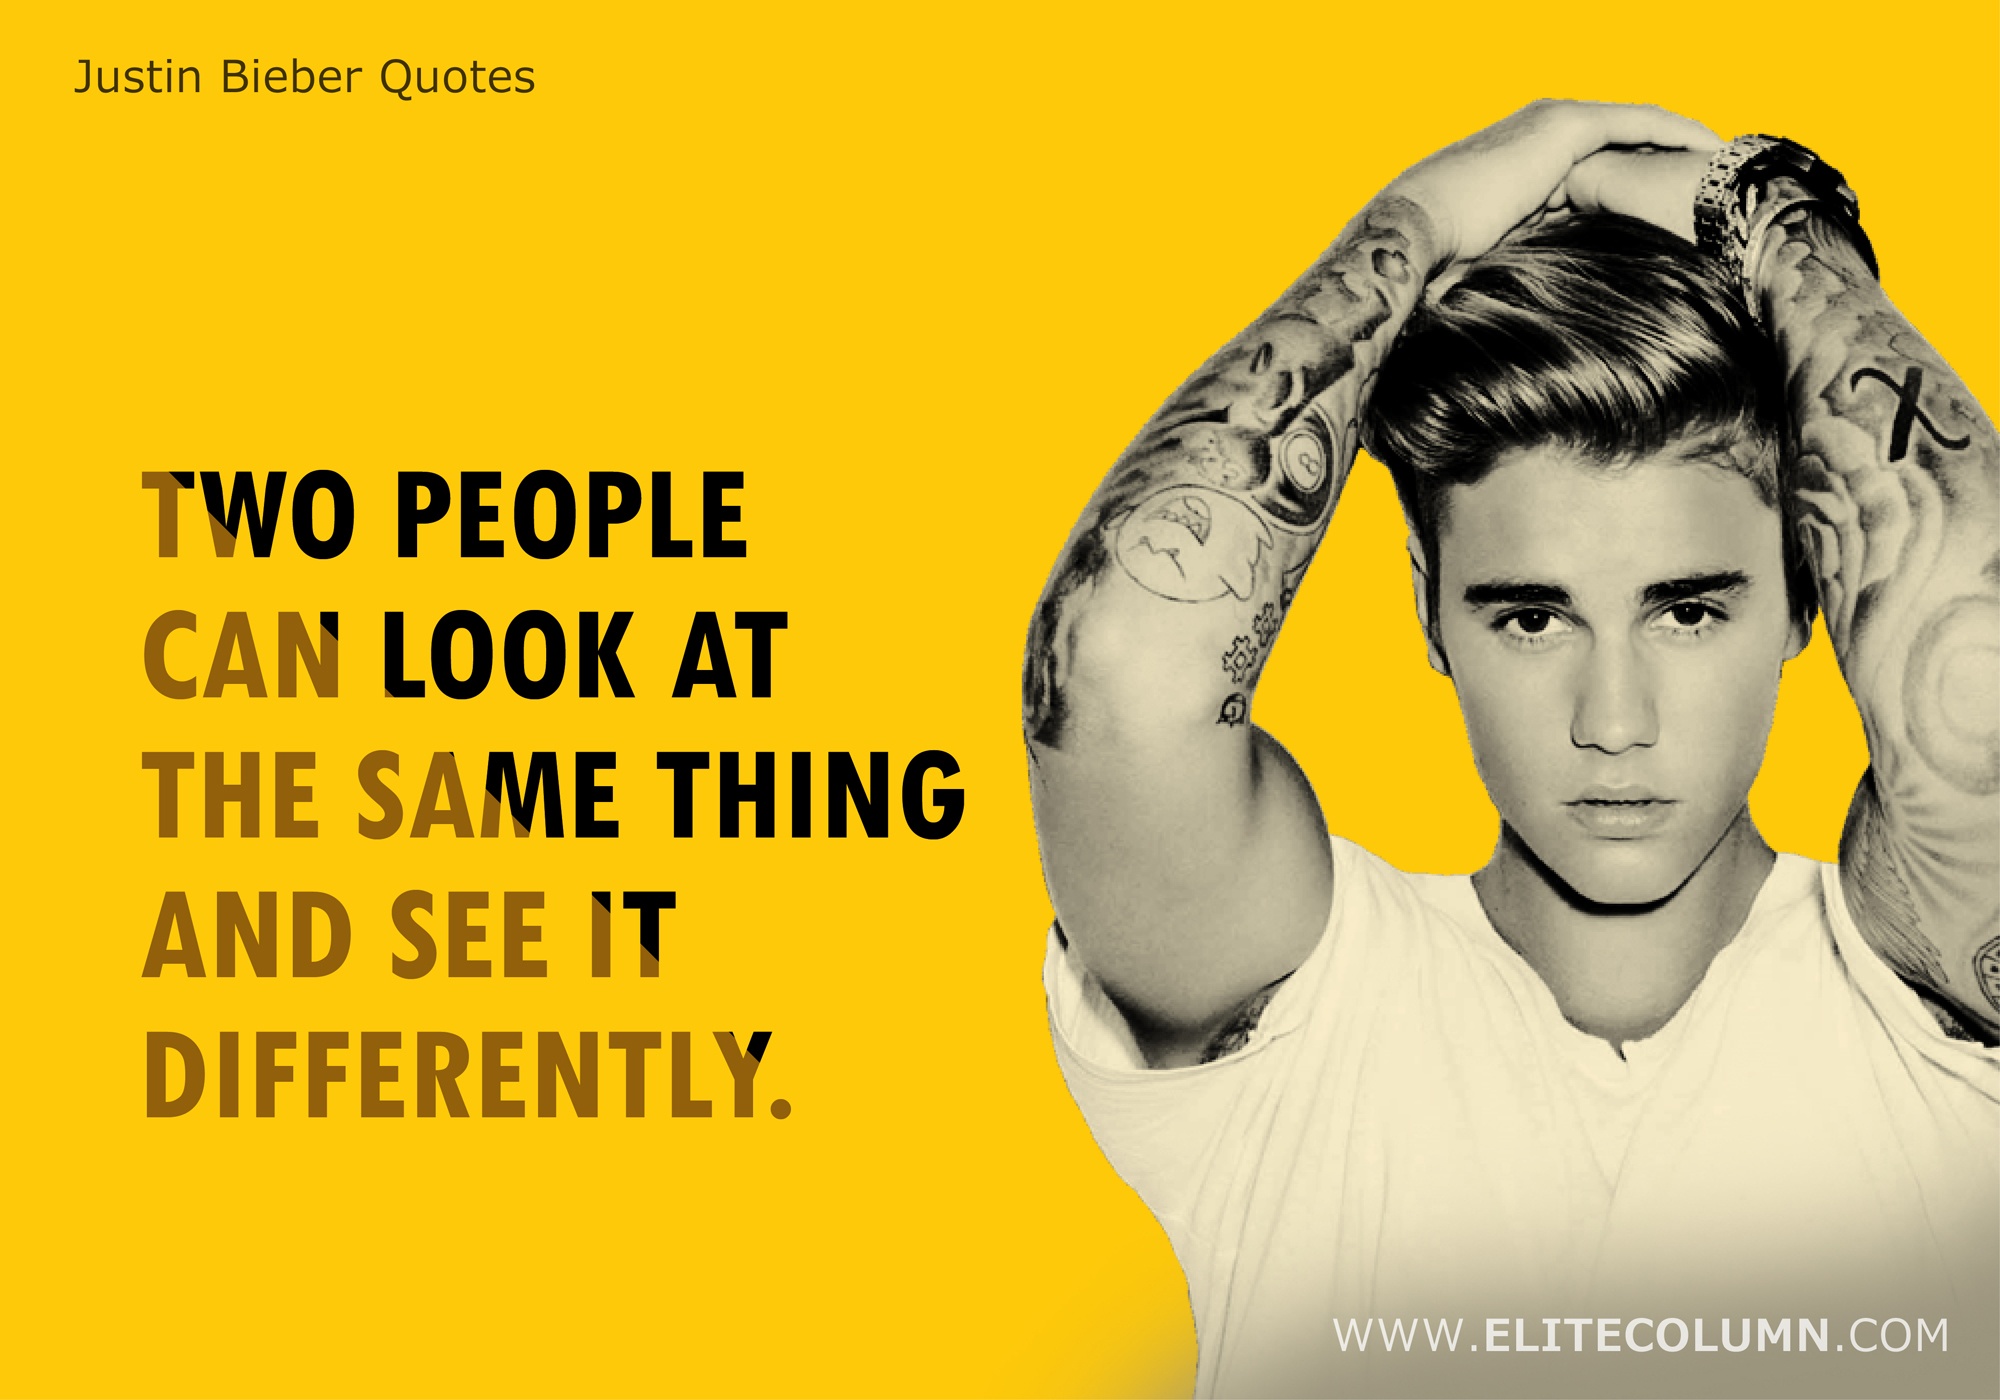 Justin Bieber Quotes (2)